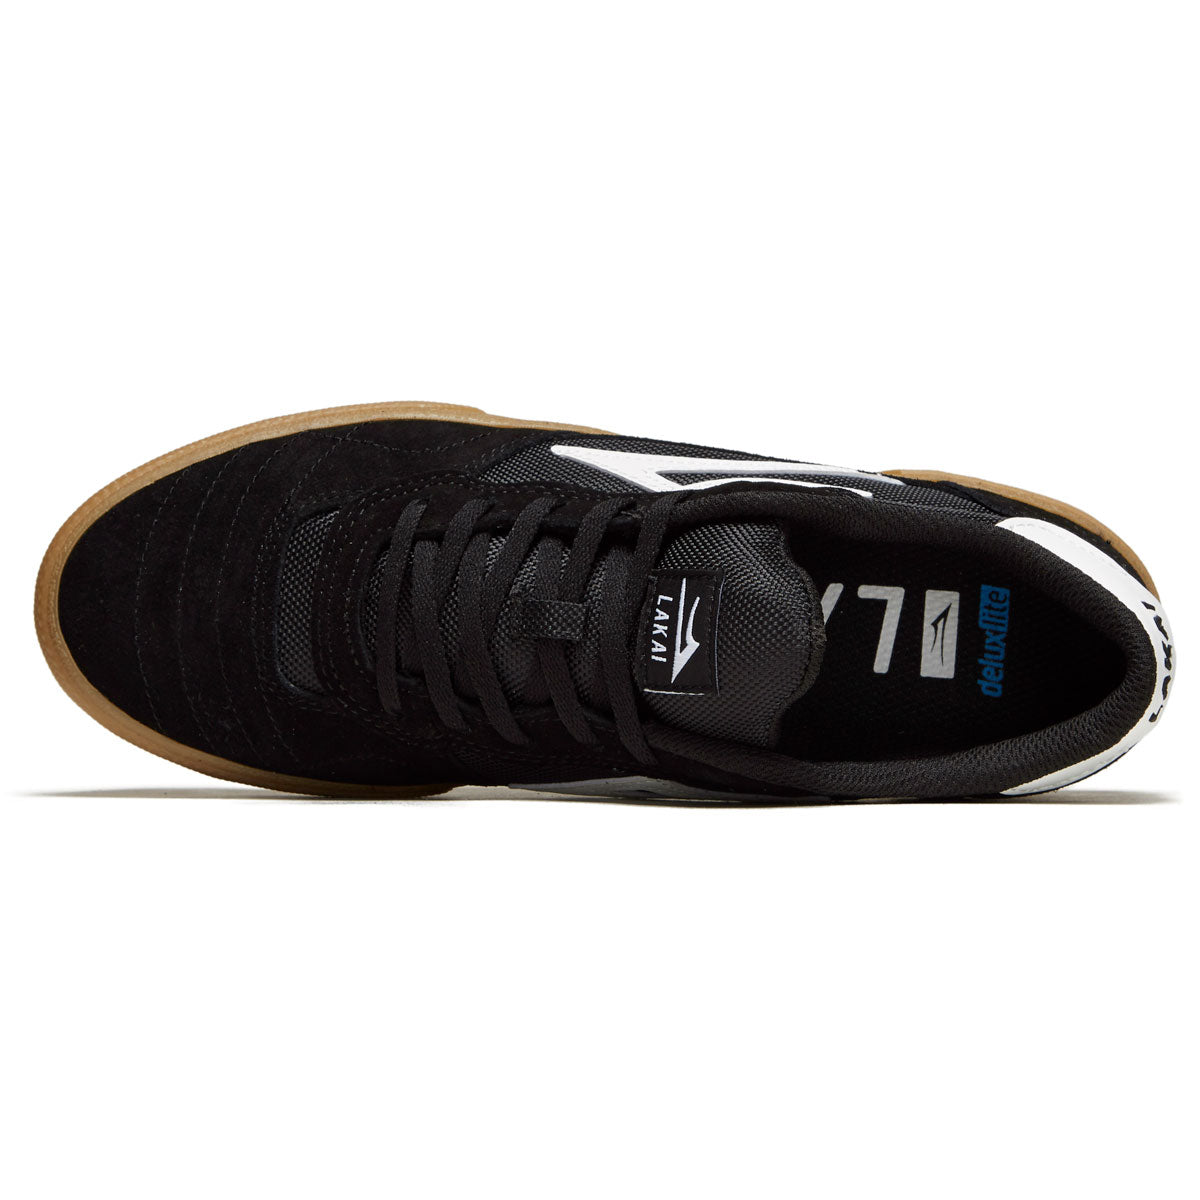 Lakai Cambridge Shoes - Black/Gum Suede image 3